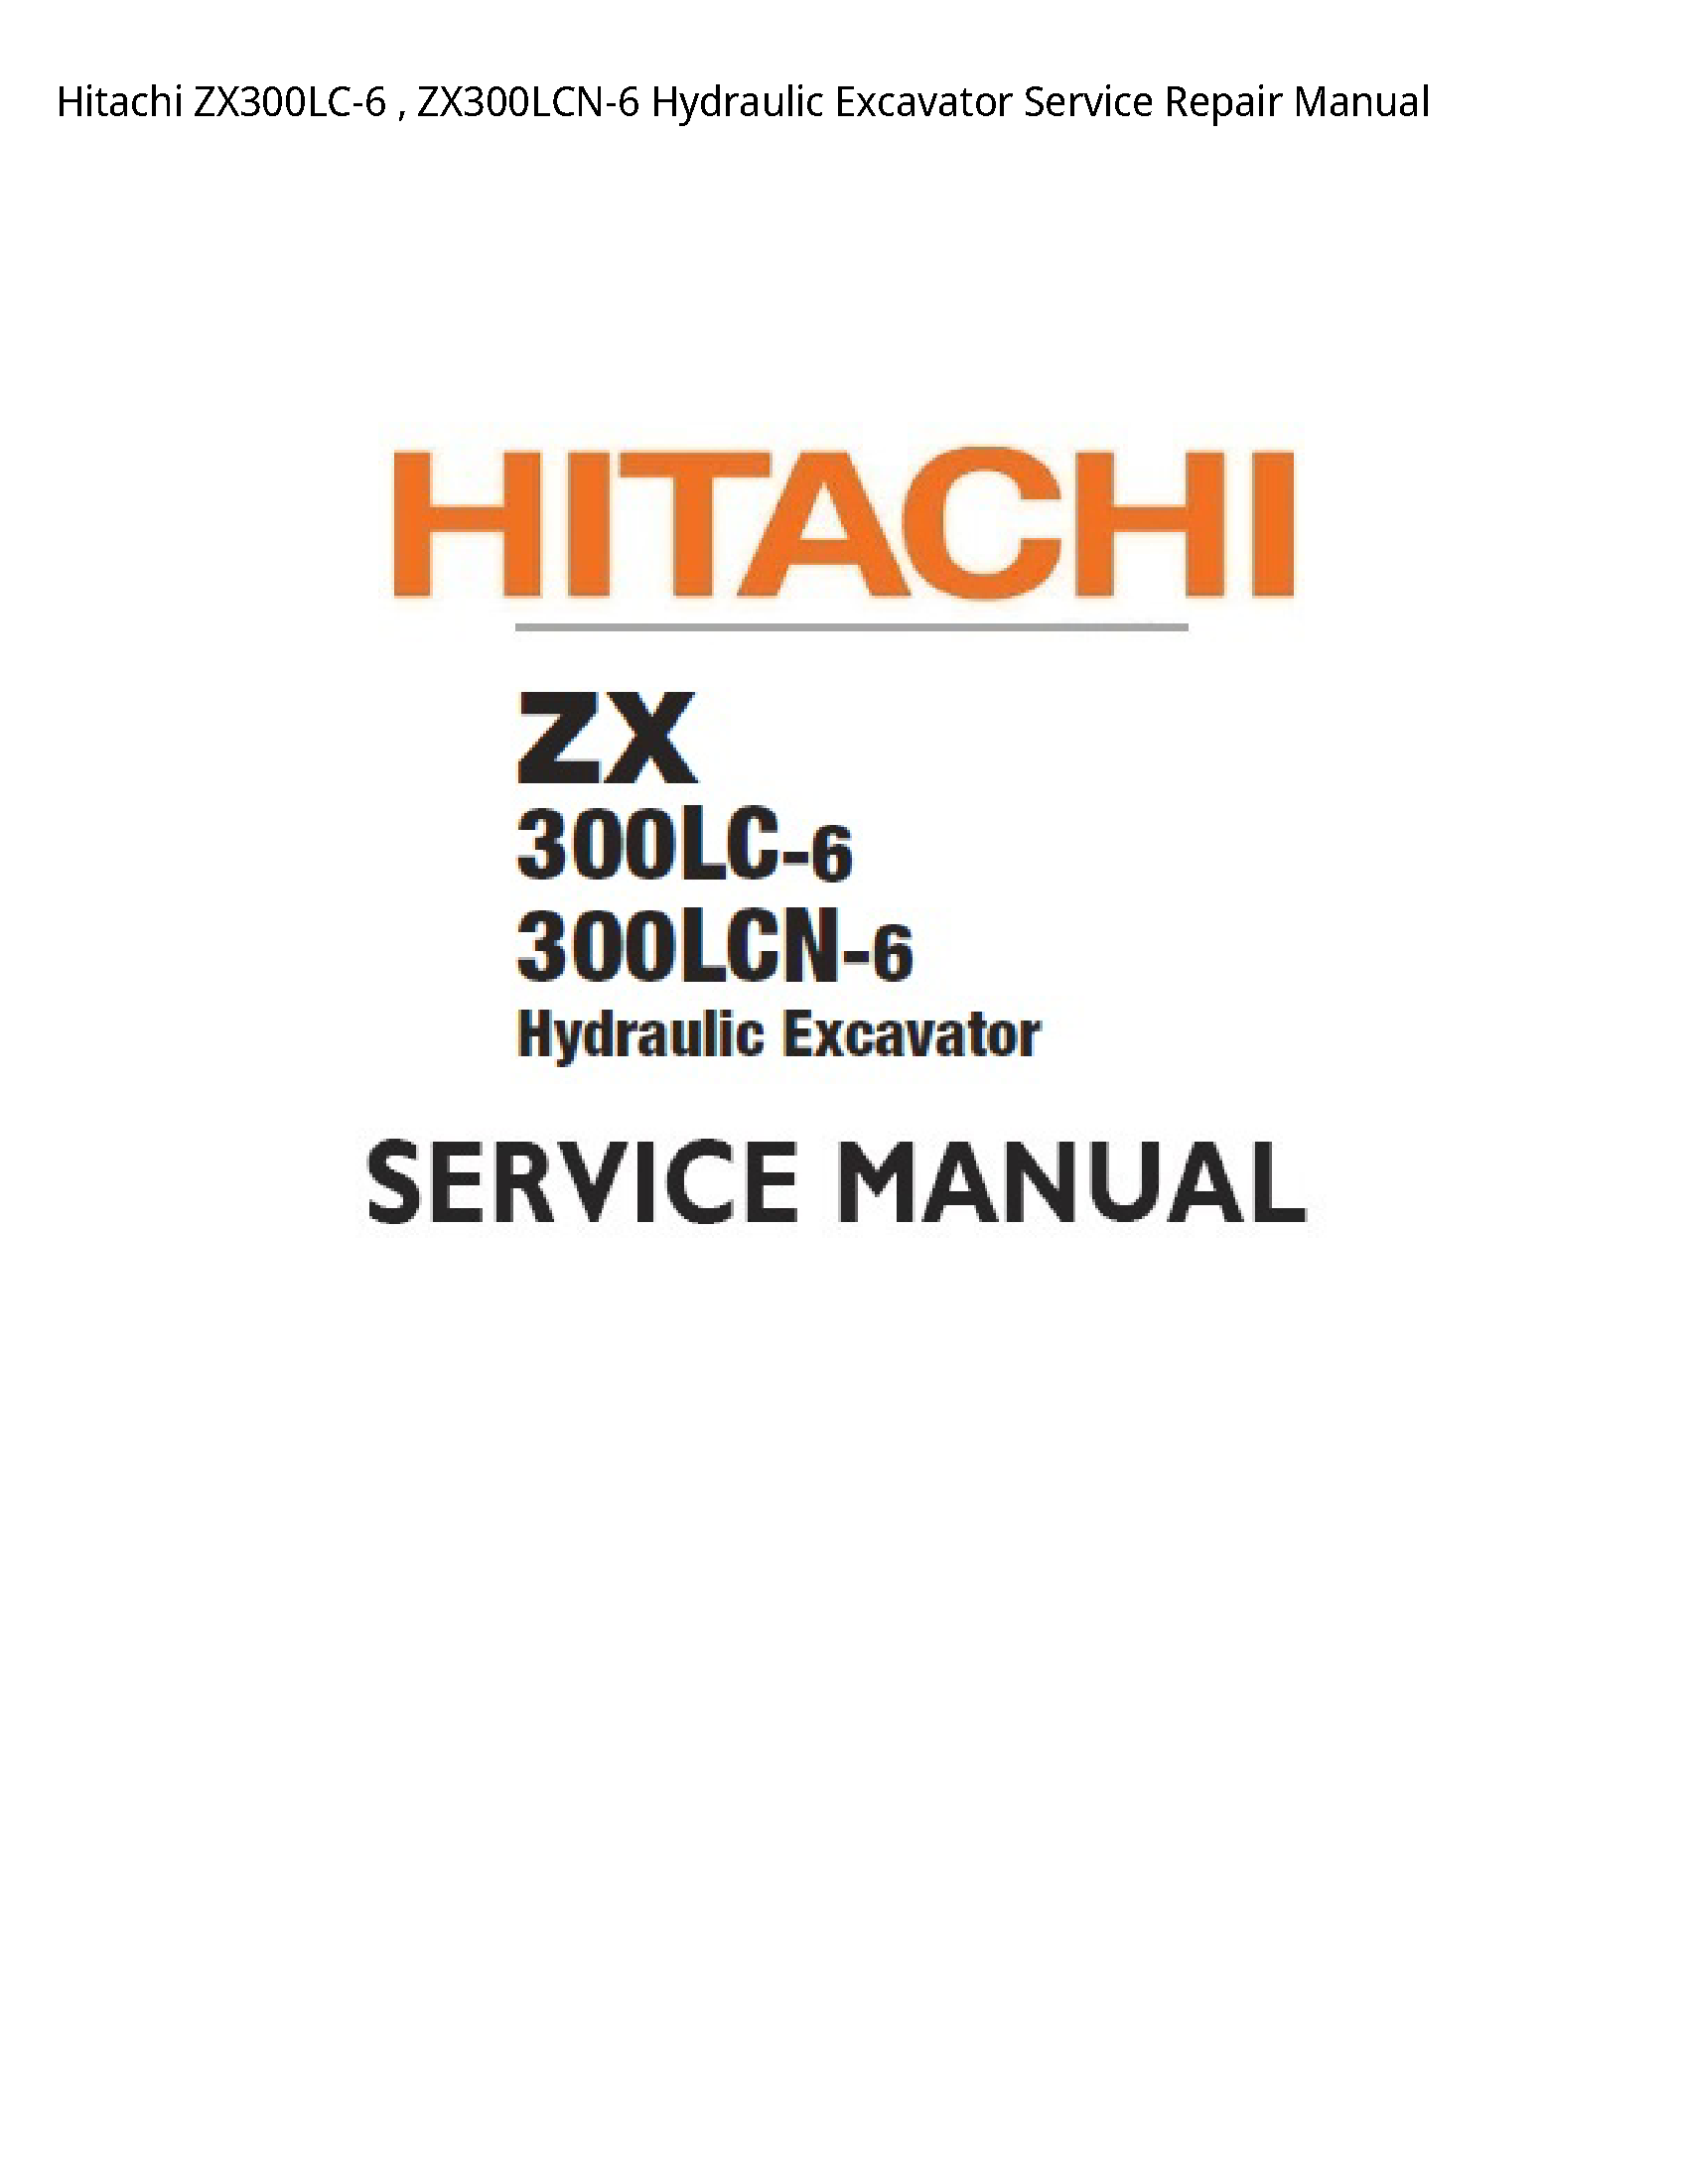 Hitachi ZX300LC-6 Hydraulic Excavator manual